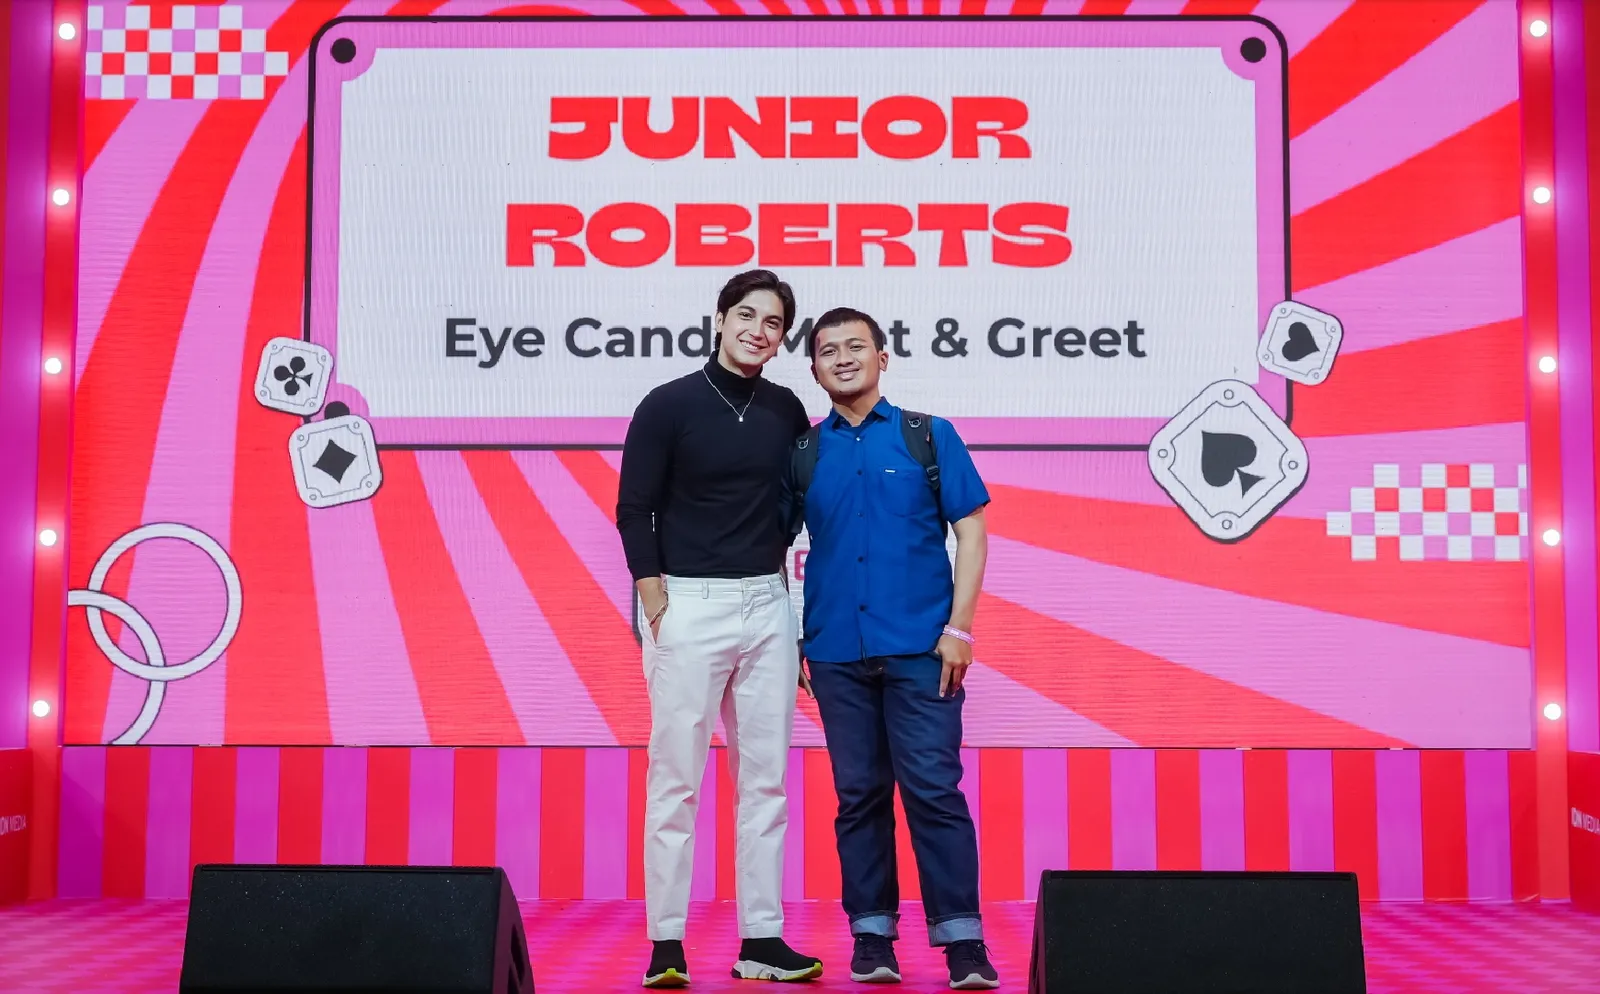 Hangatnya Suasana Meet & Greet with Junior Roberts